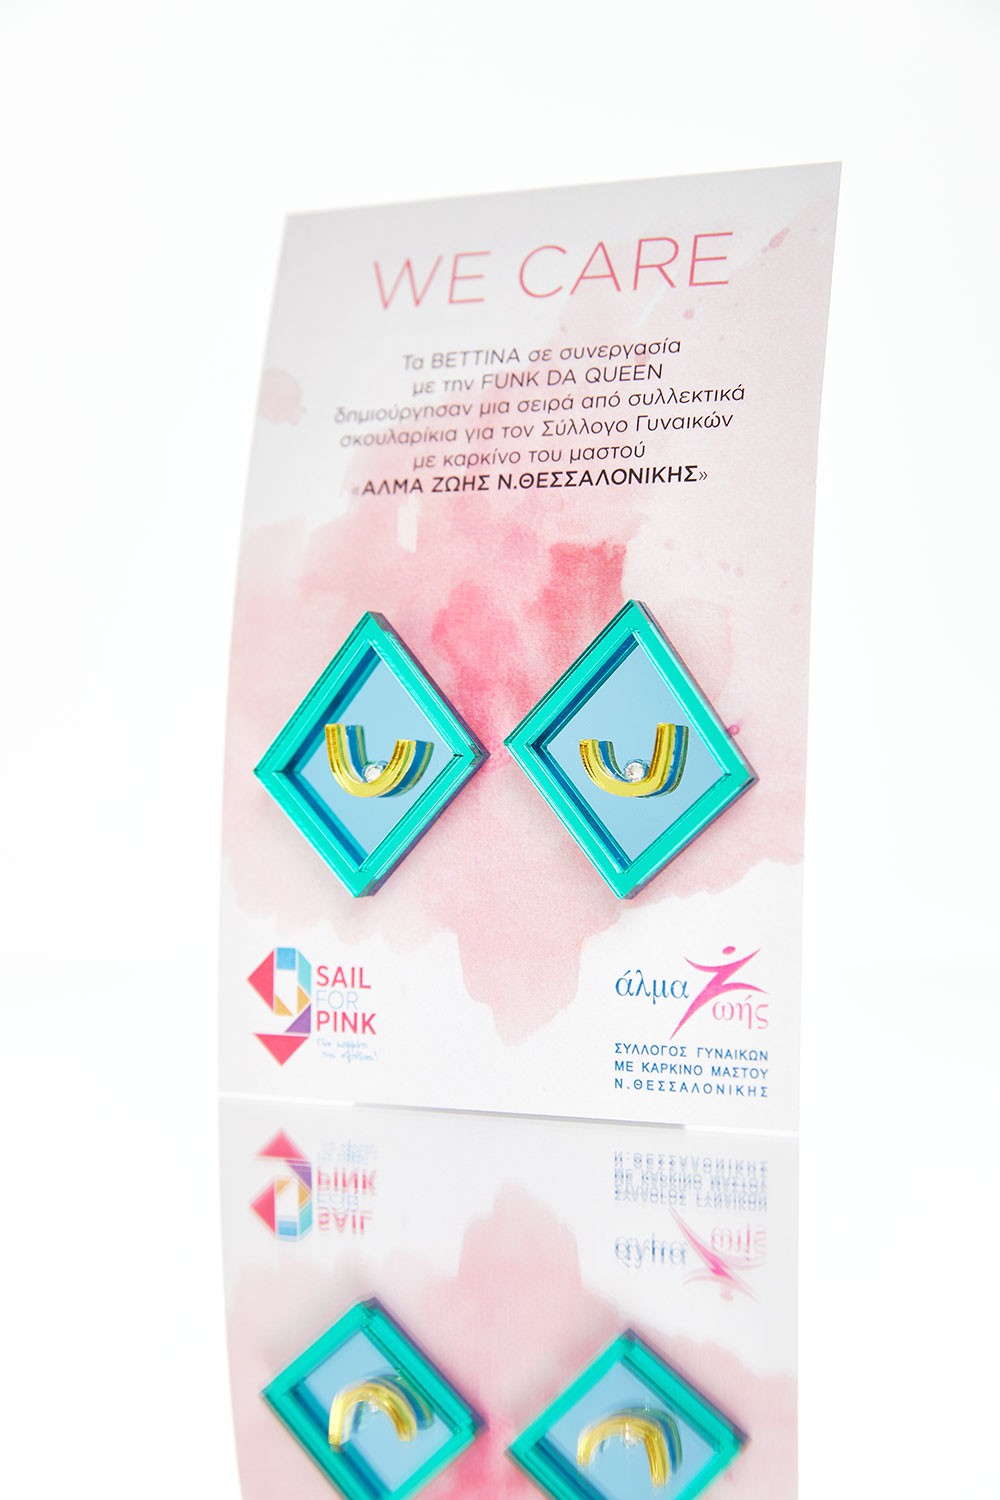 WE CARE - Καμπάνια για την Πρόληψη του Καρκίνου του Μαστού